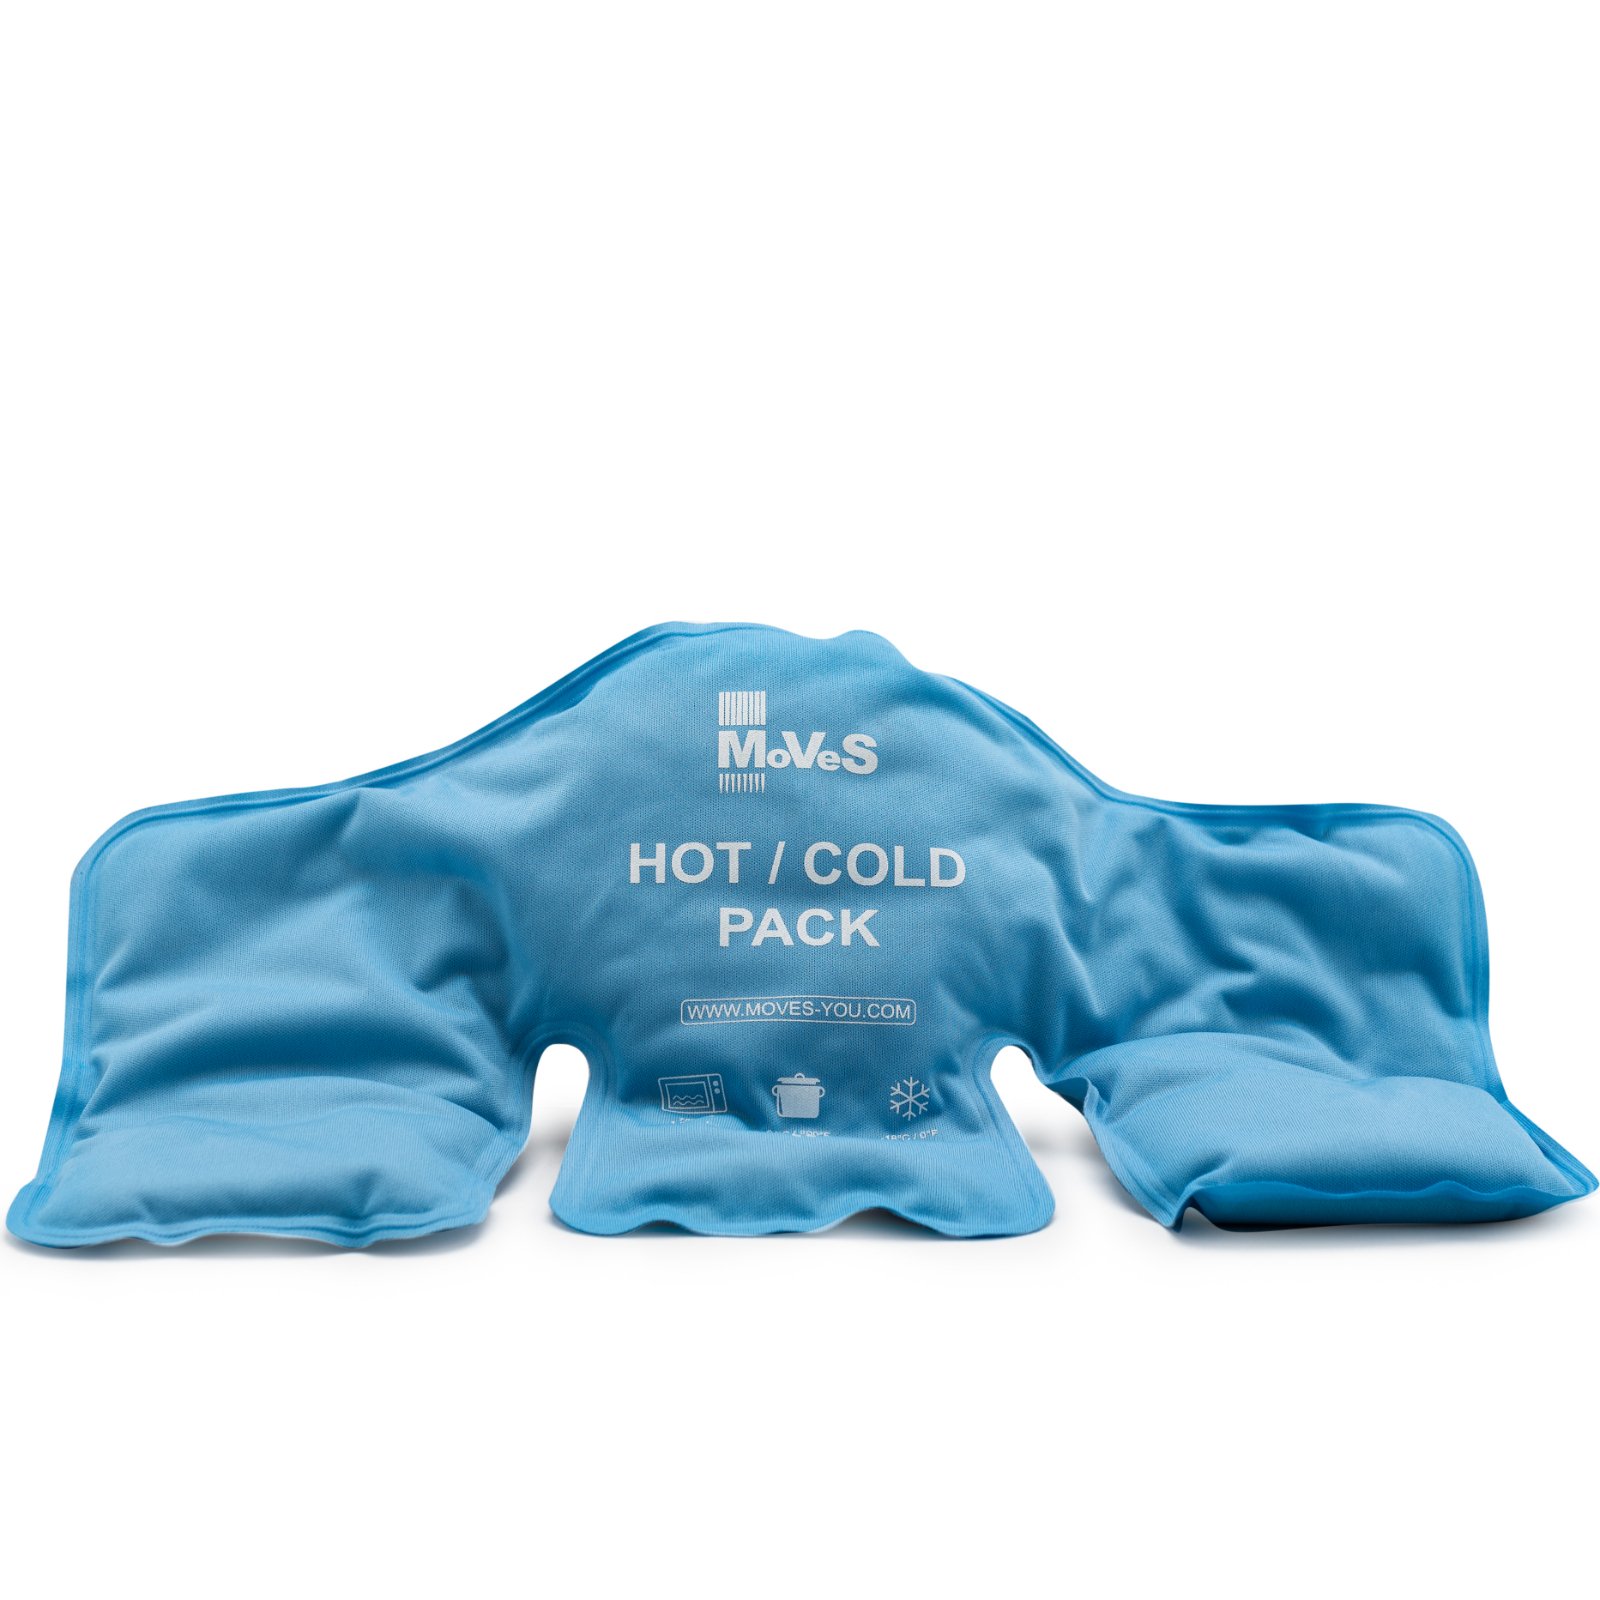 Hot cold pack Standaard Moves nek-schouder